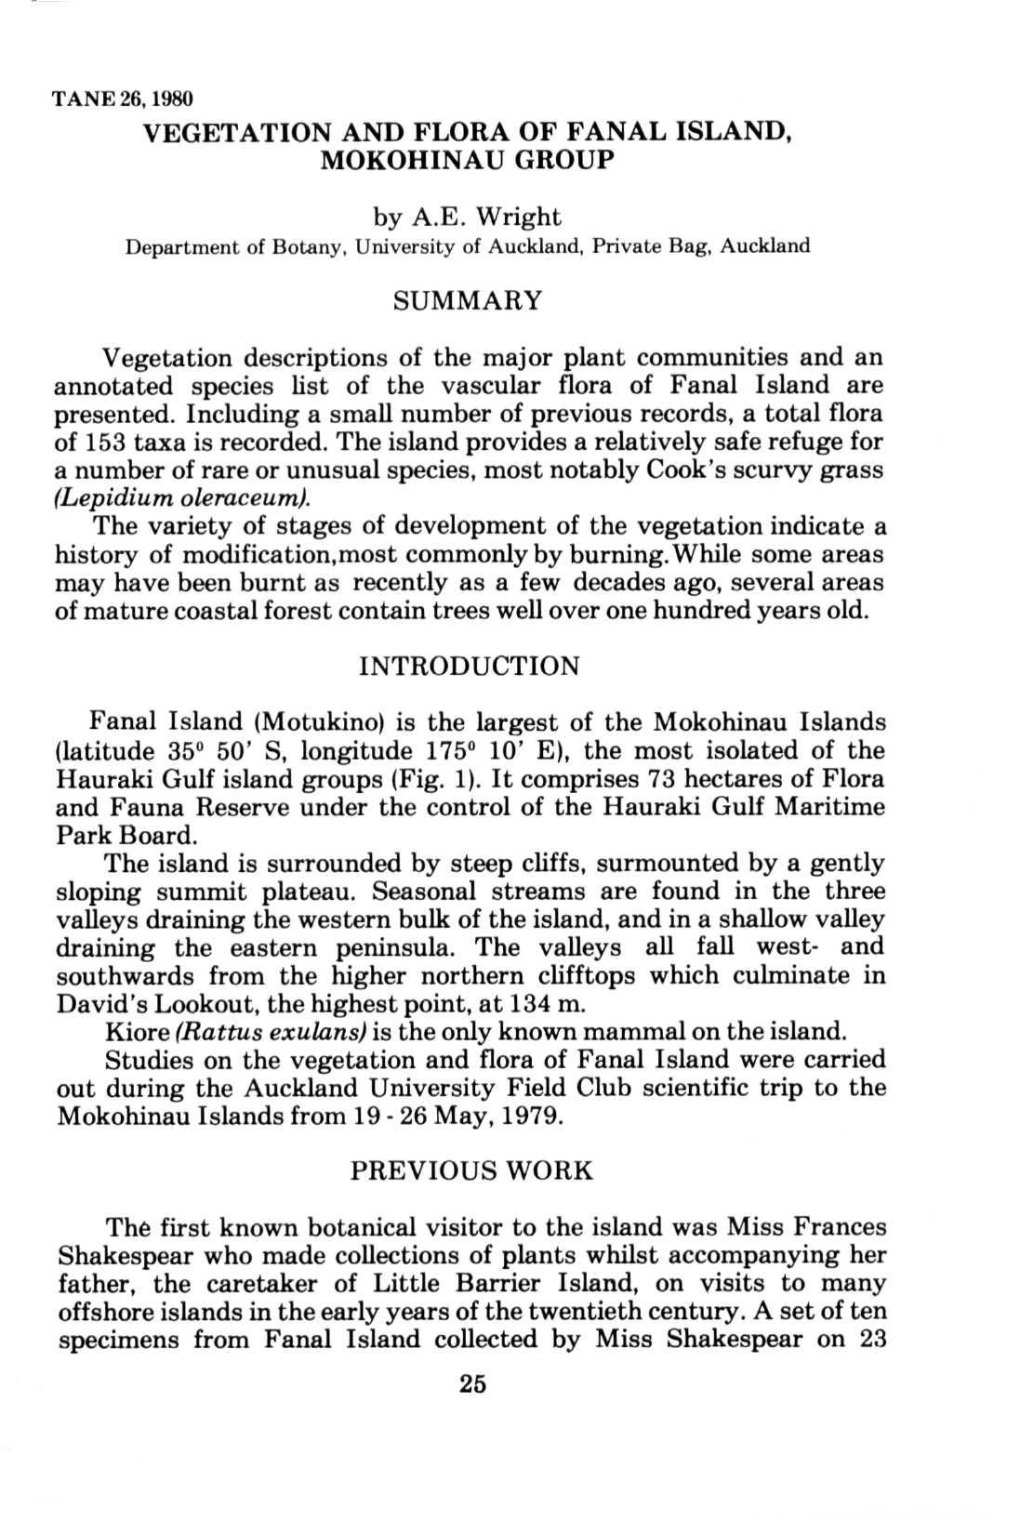 VEGETATION and FLORA of FANAL ISLAND, MOKOHINAU GROUP by A.E. Wright SUMMARY Vegetation Descriptions of the Major Plant Communit